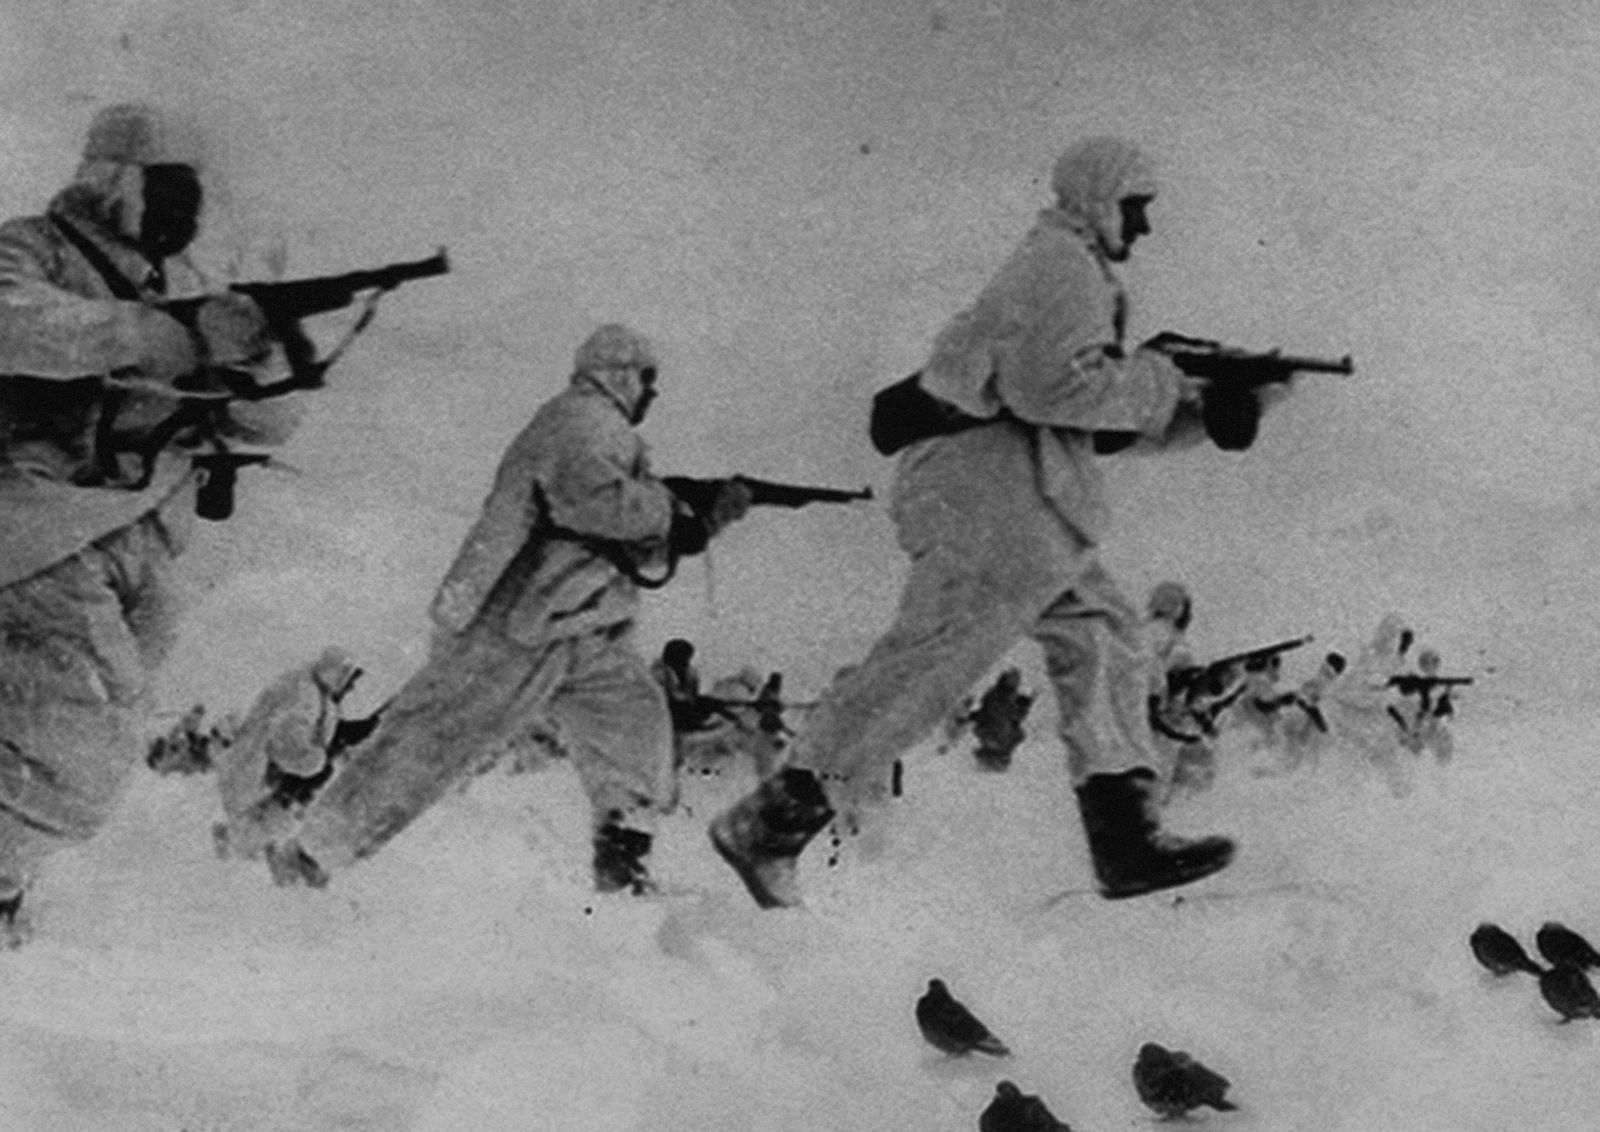 © Asya Zhetvina - The spy pigeons in a battlefield during World War II,1942